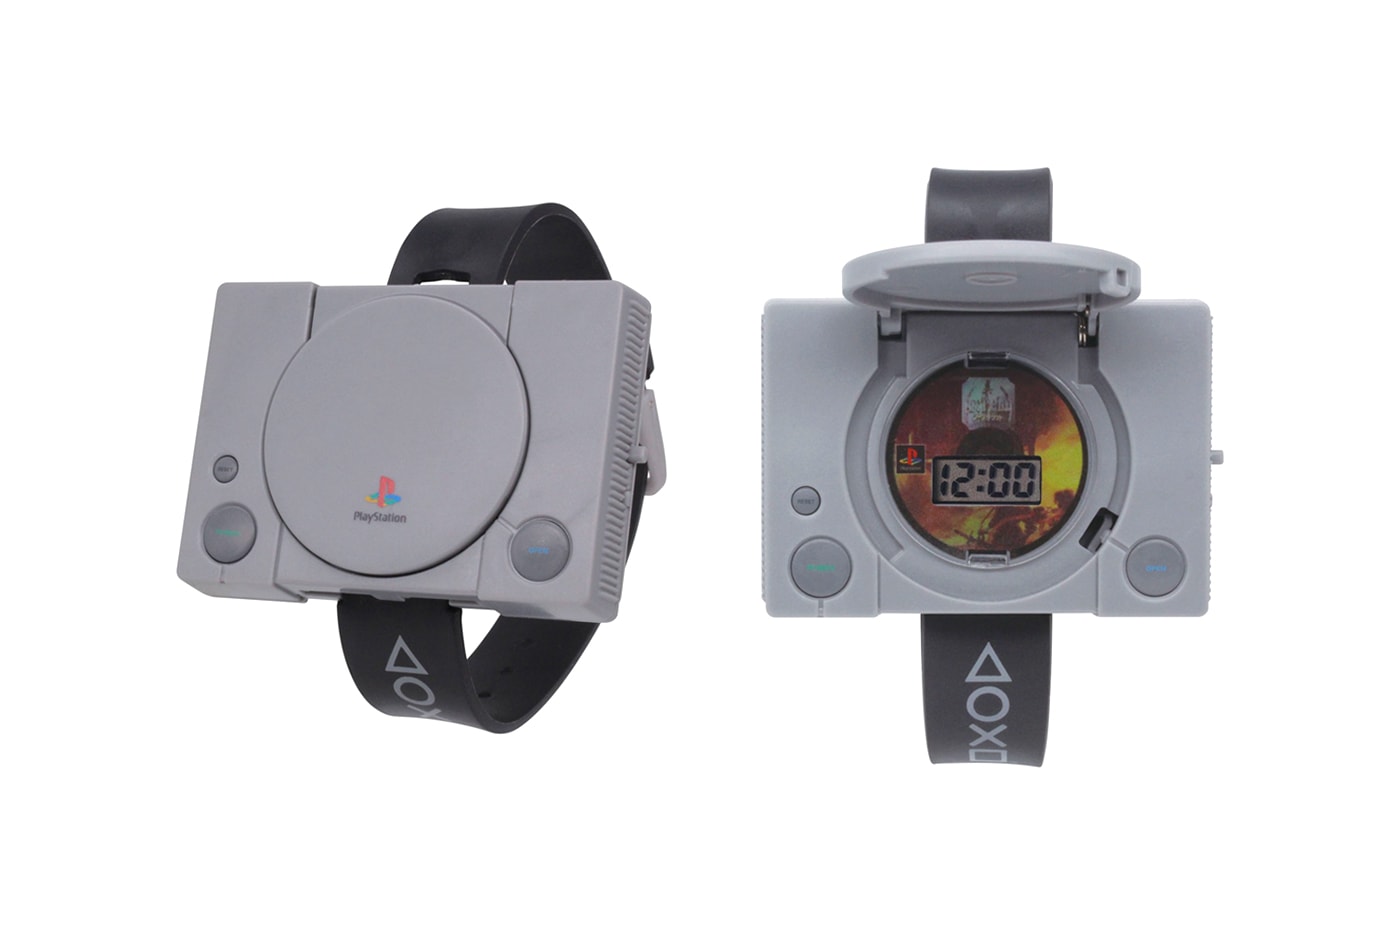 Takara Tomy Arts Sony PlayStation 1 SEGA Saturn Watch Release Info Buy Price 